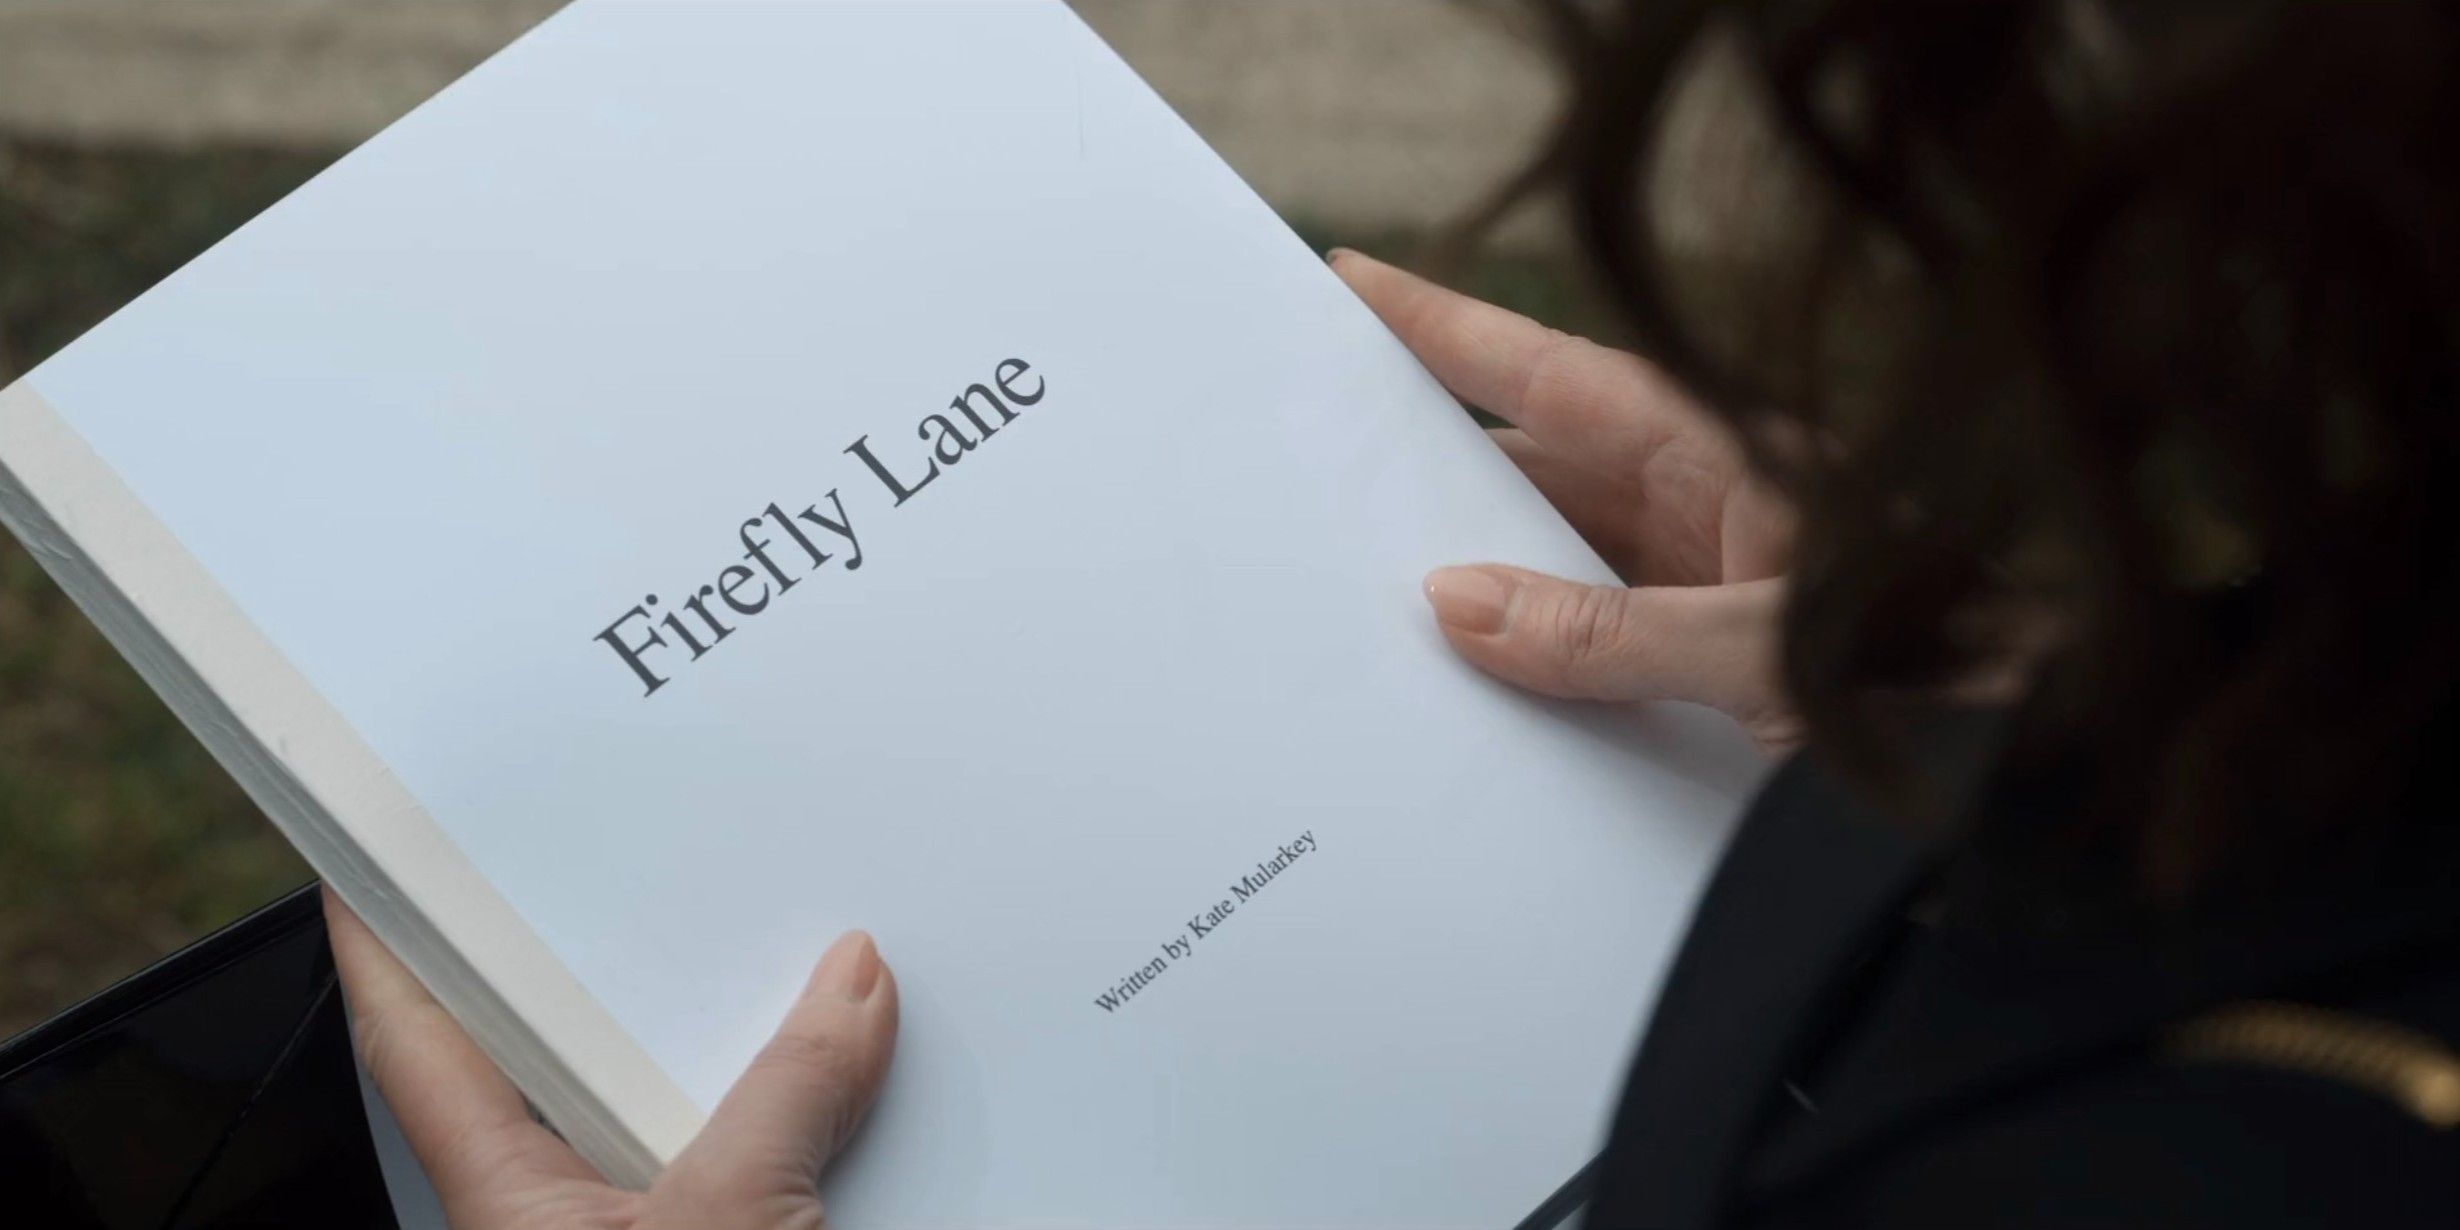 fireflylanebook